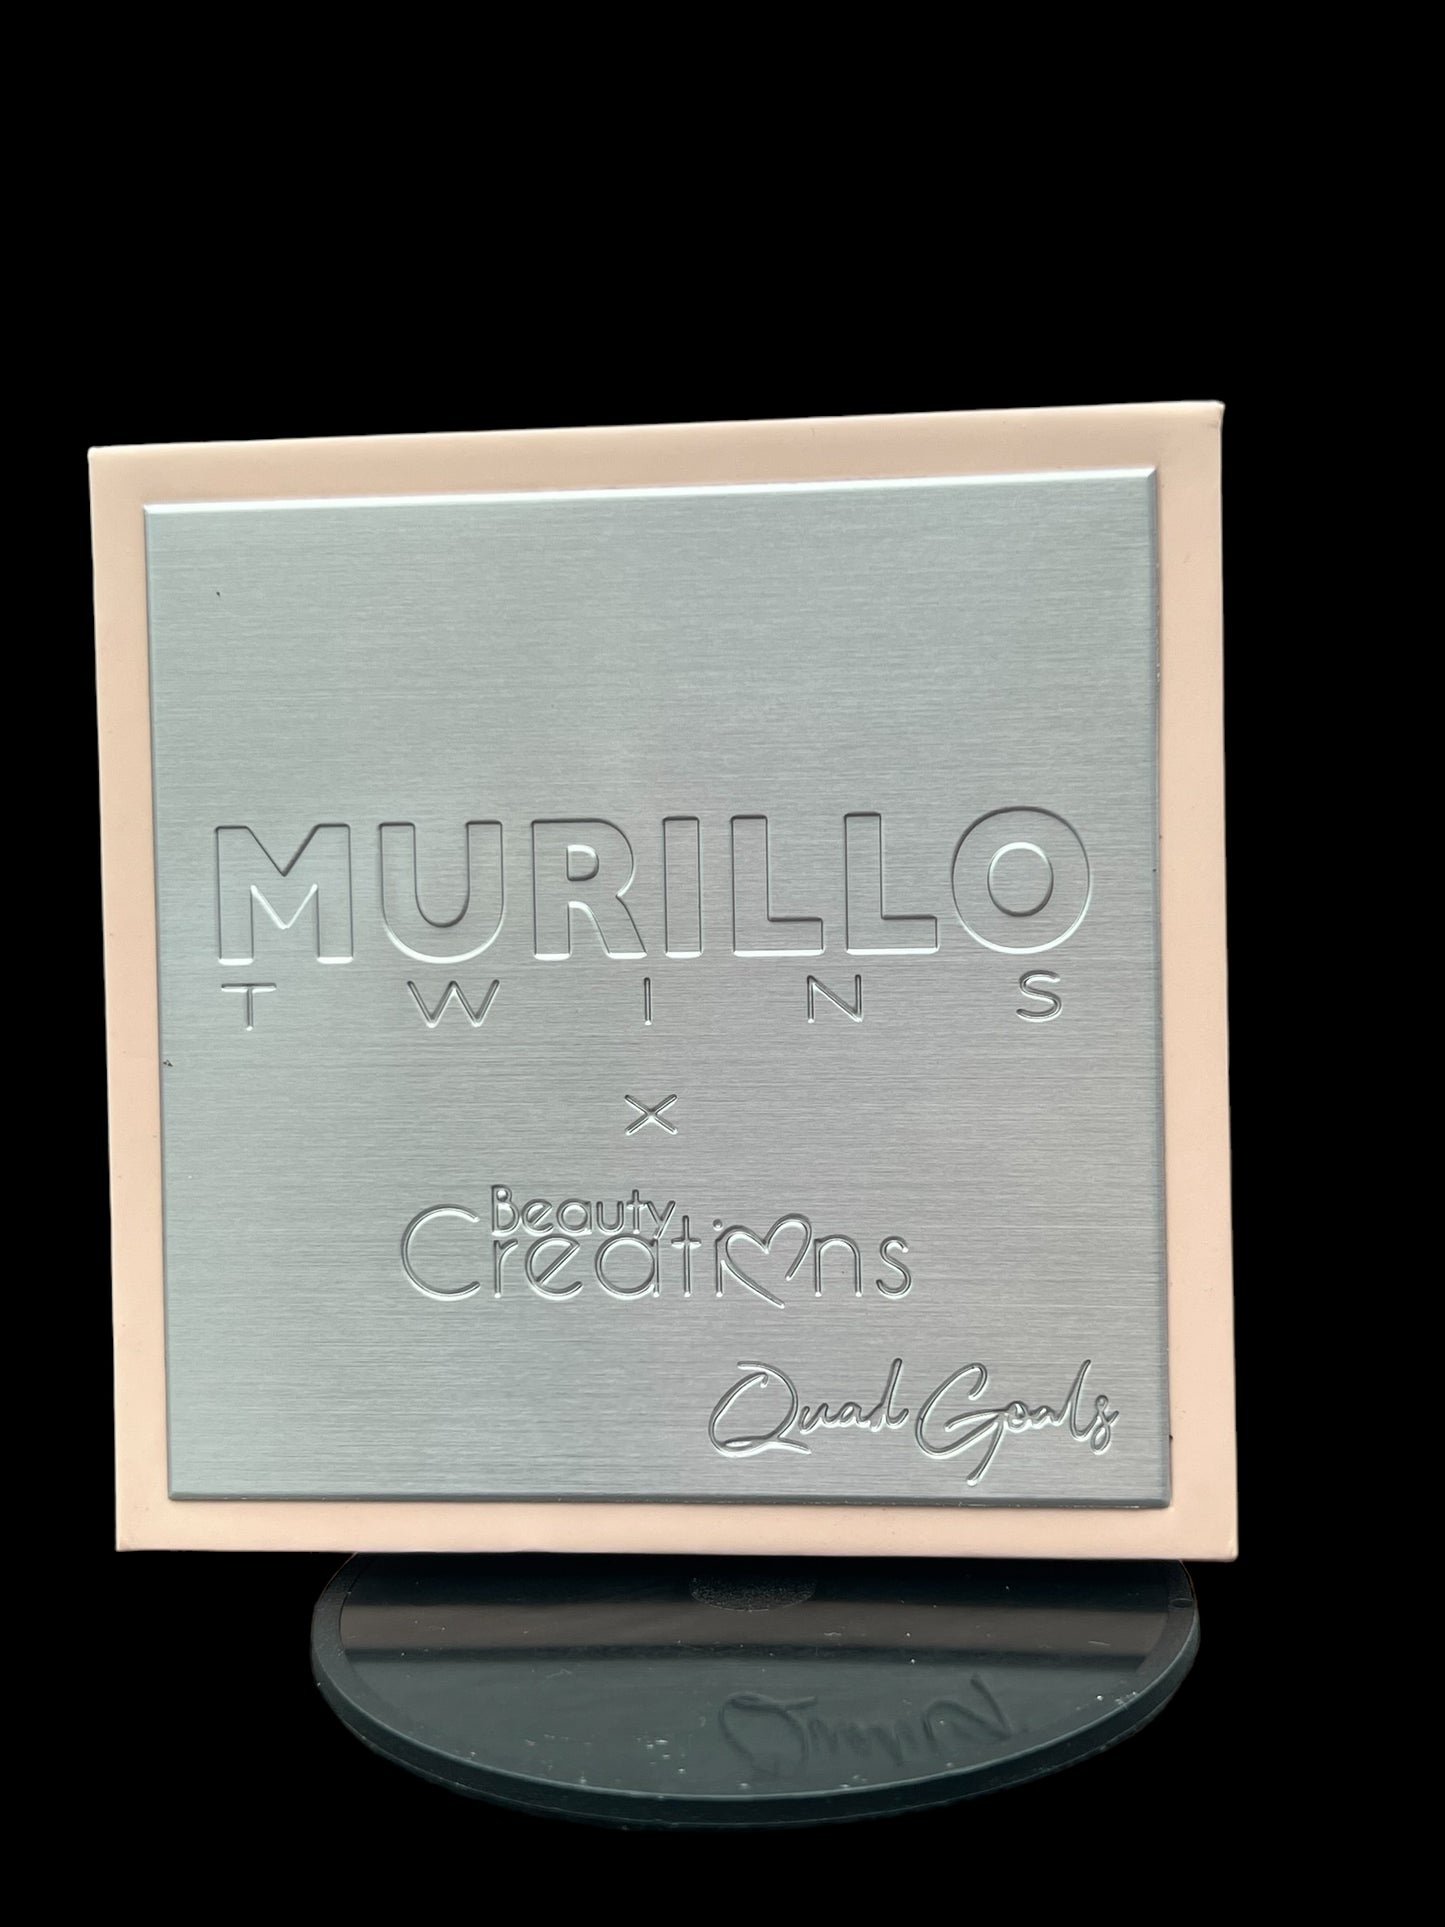 Murillo Twins Beauty Creations QUAD GOALS